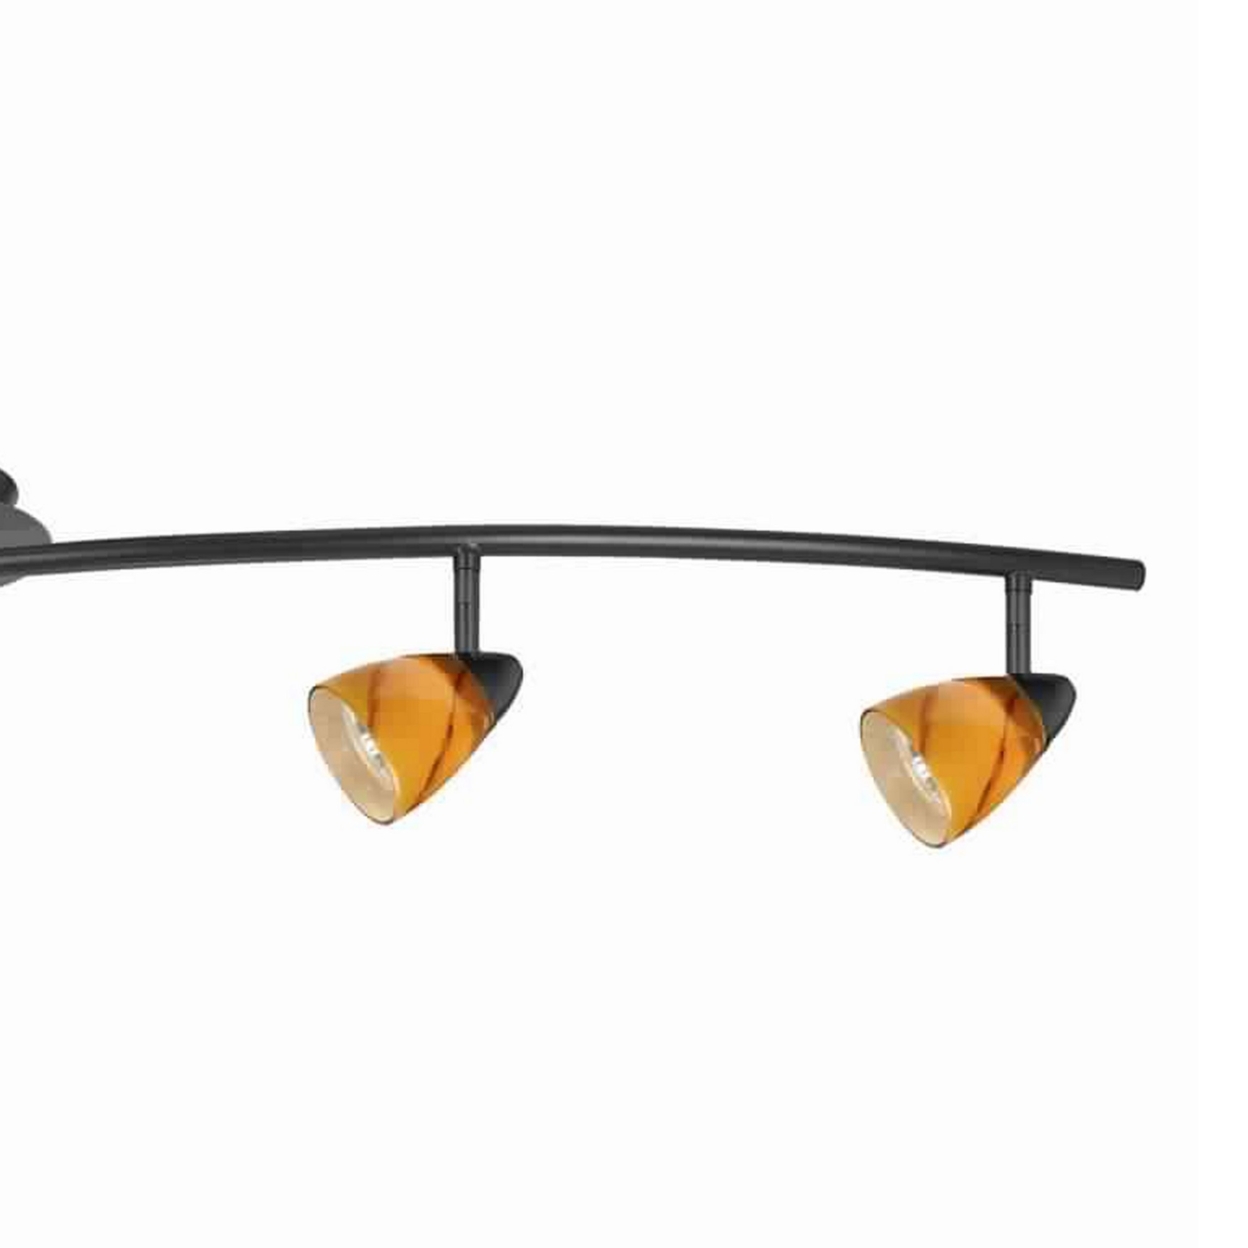 5 Light Glass Shade 120V Metal Track Light Fixture, Black And Yellow- Saltoro Sherpi